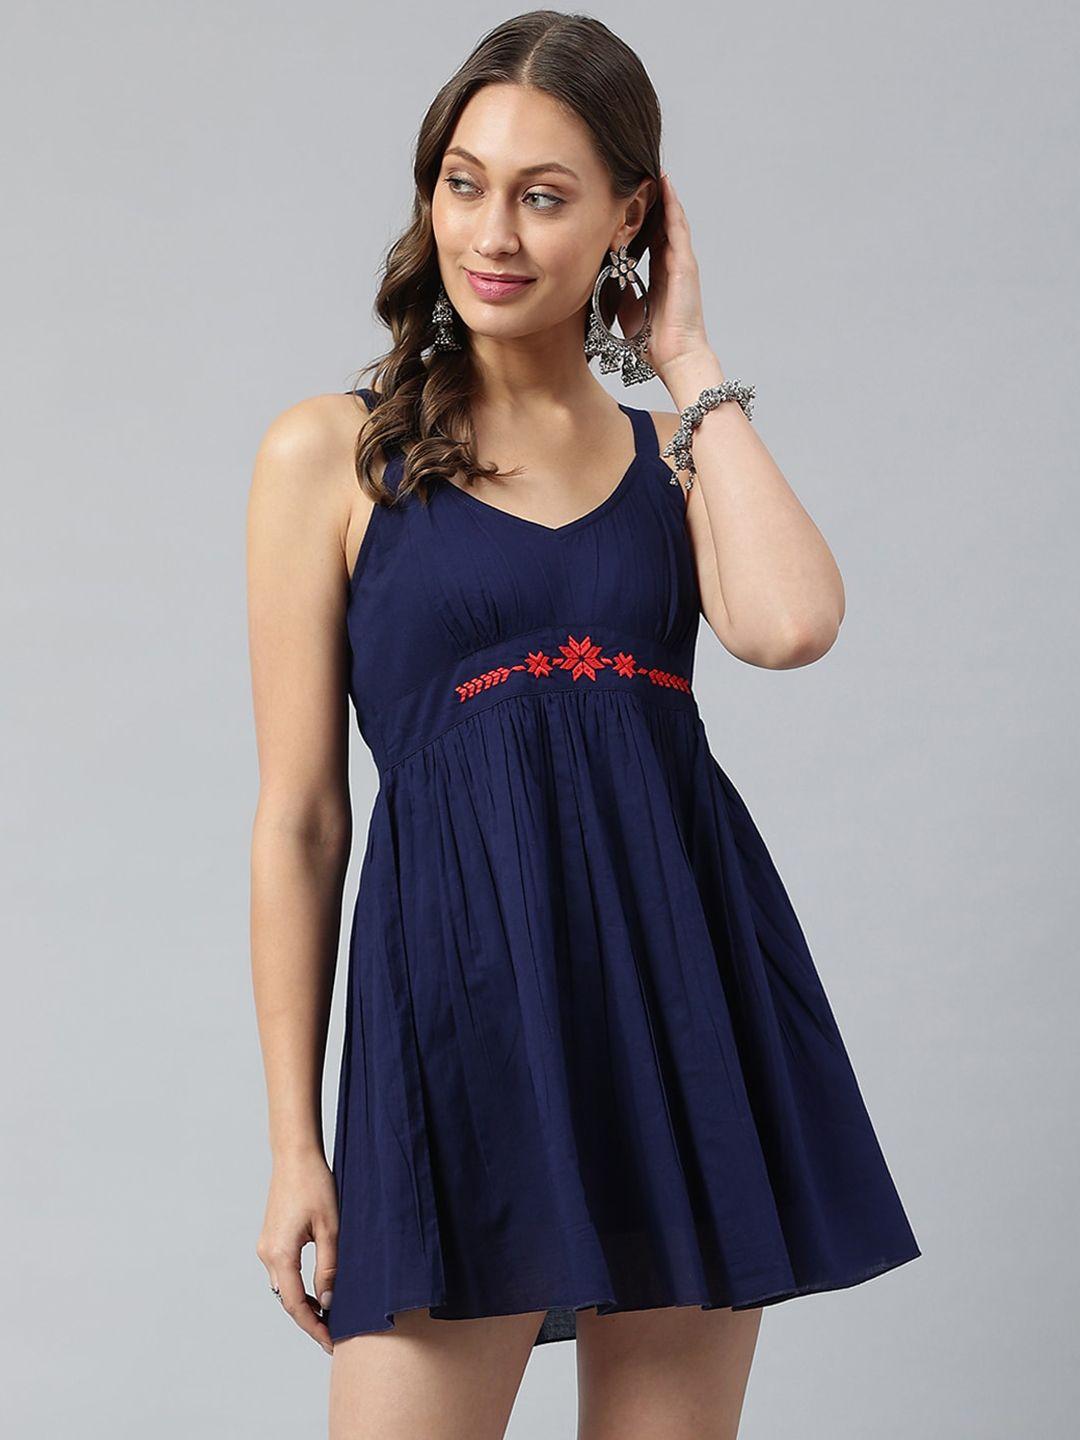 pinwheel navy blue empire mini dress